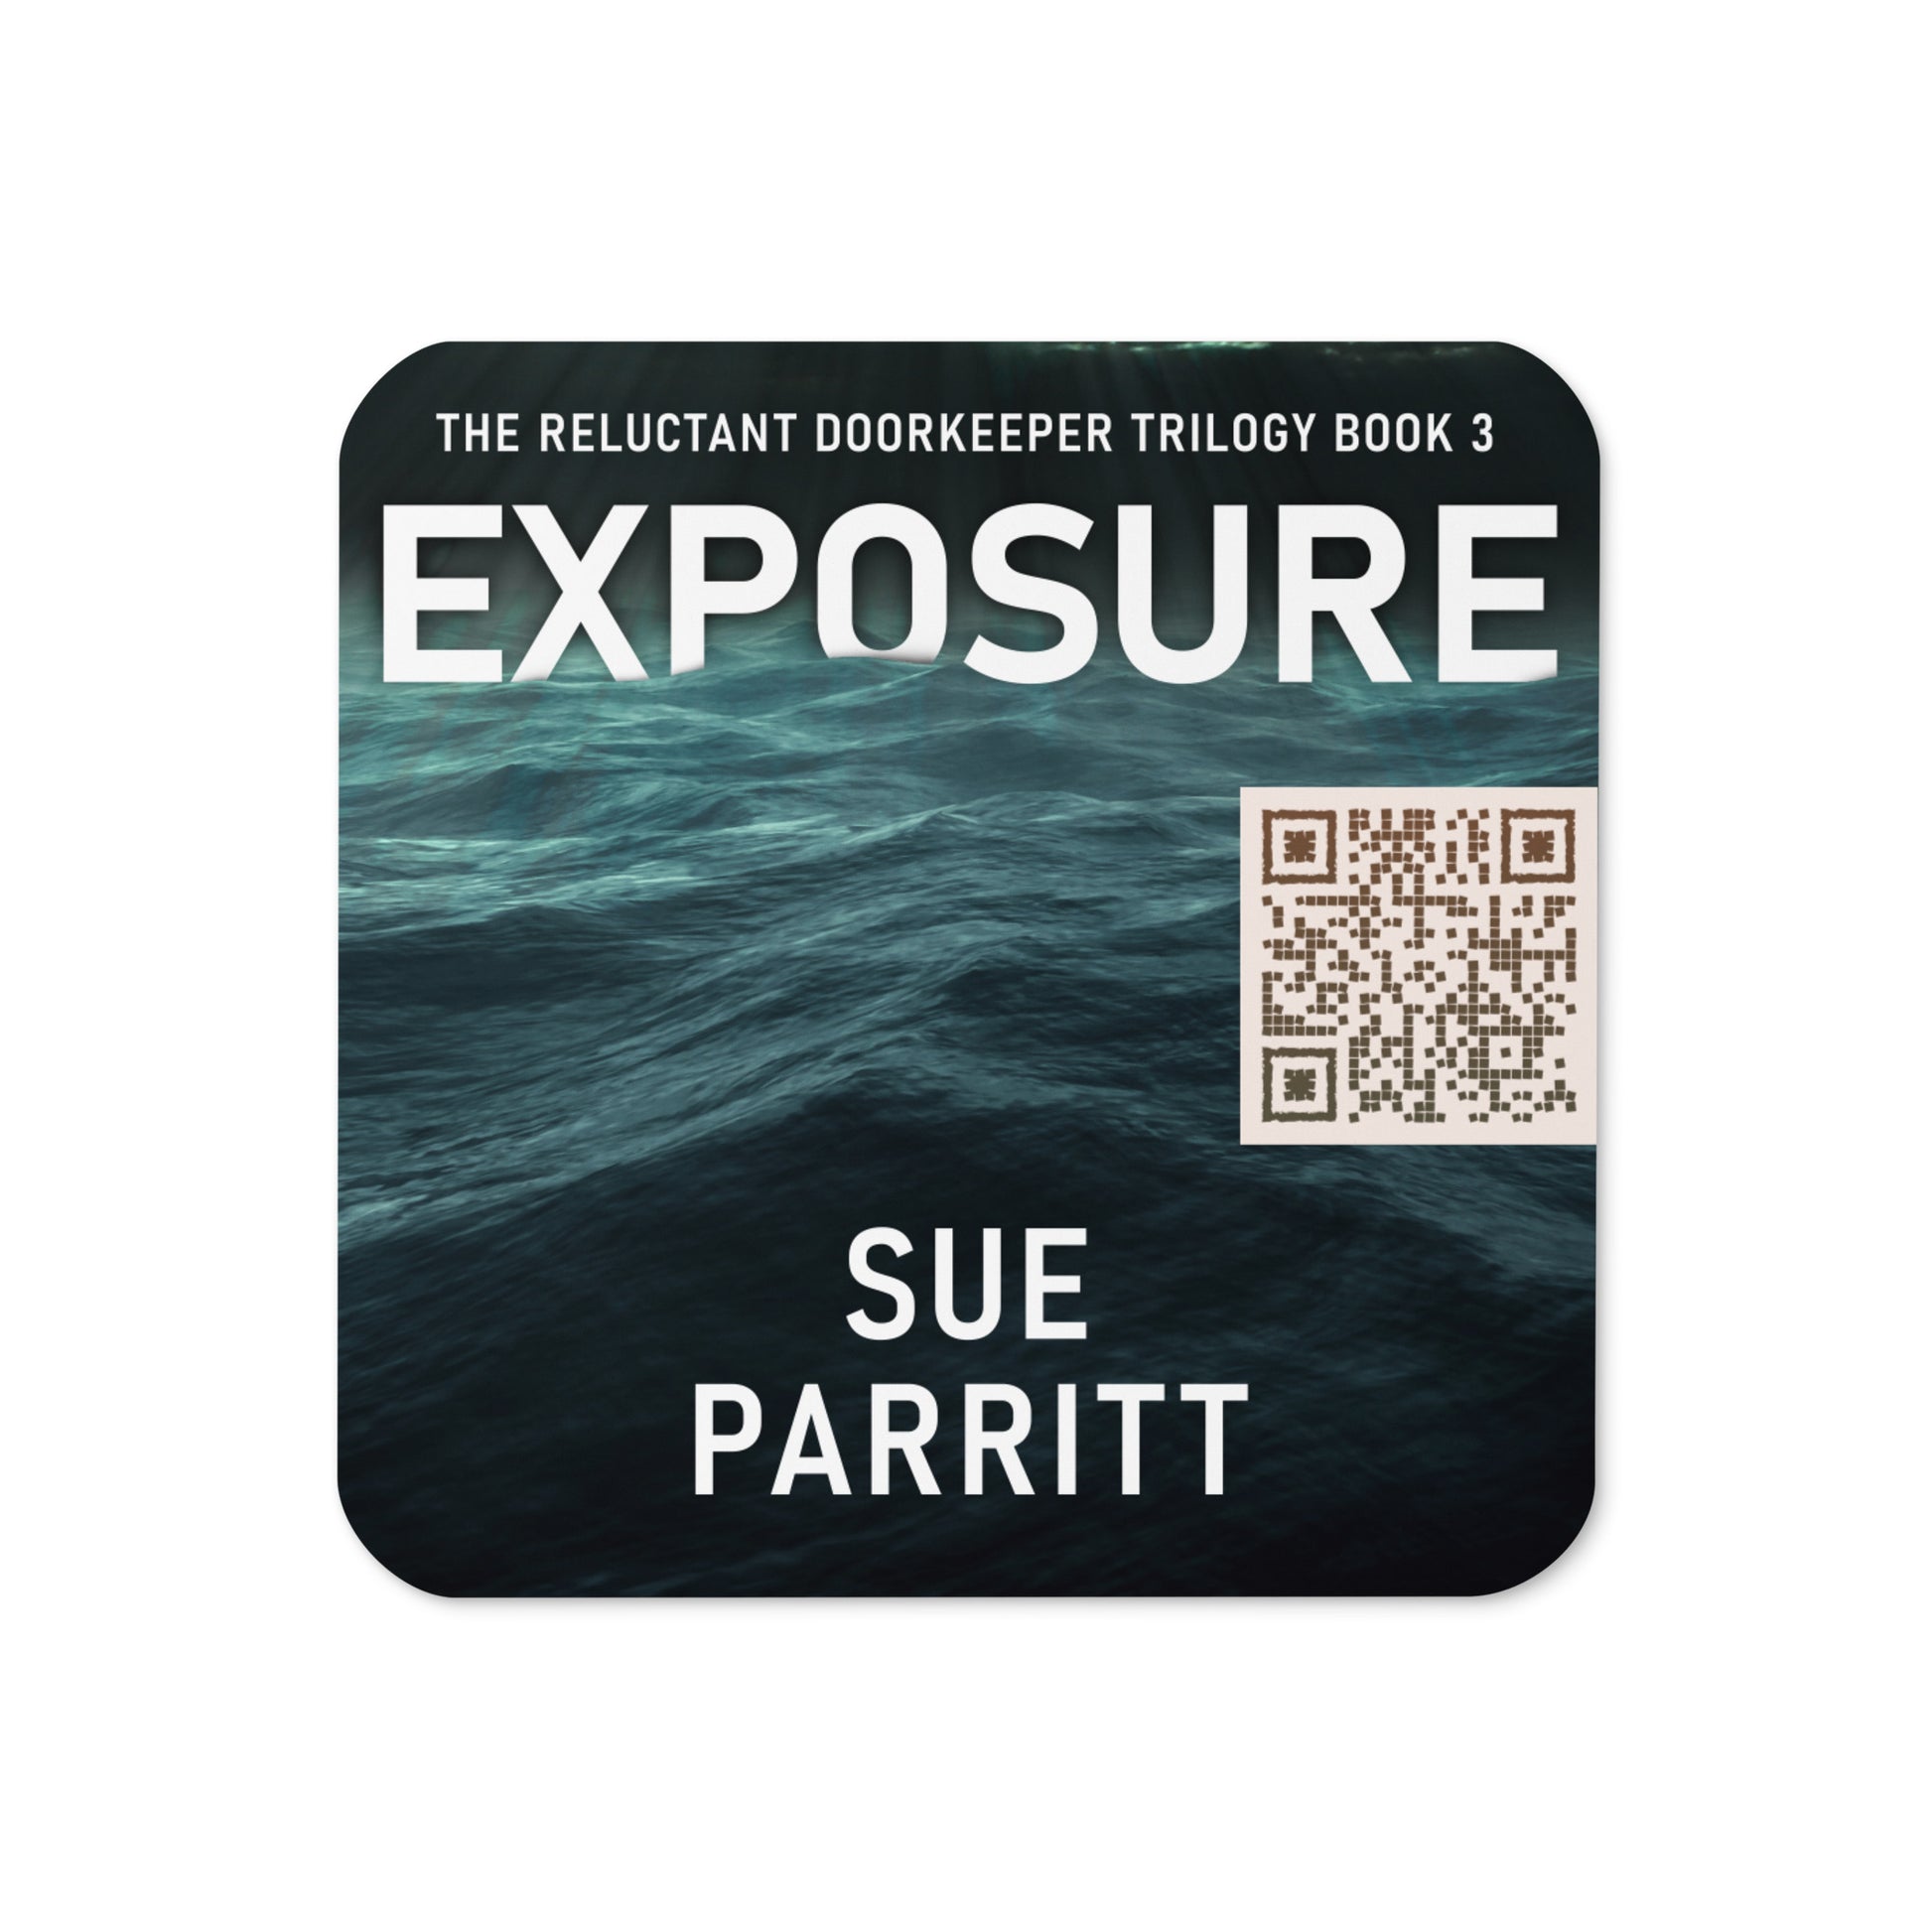 coaster with cover of Sue Parritt's book Exposure